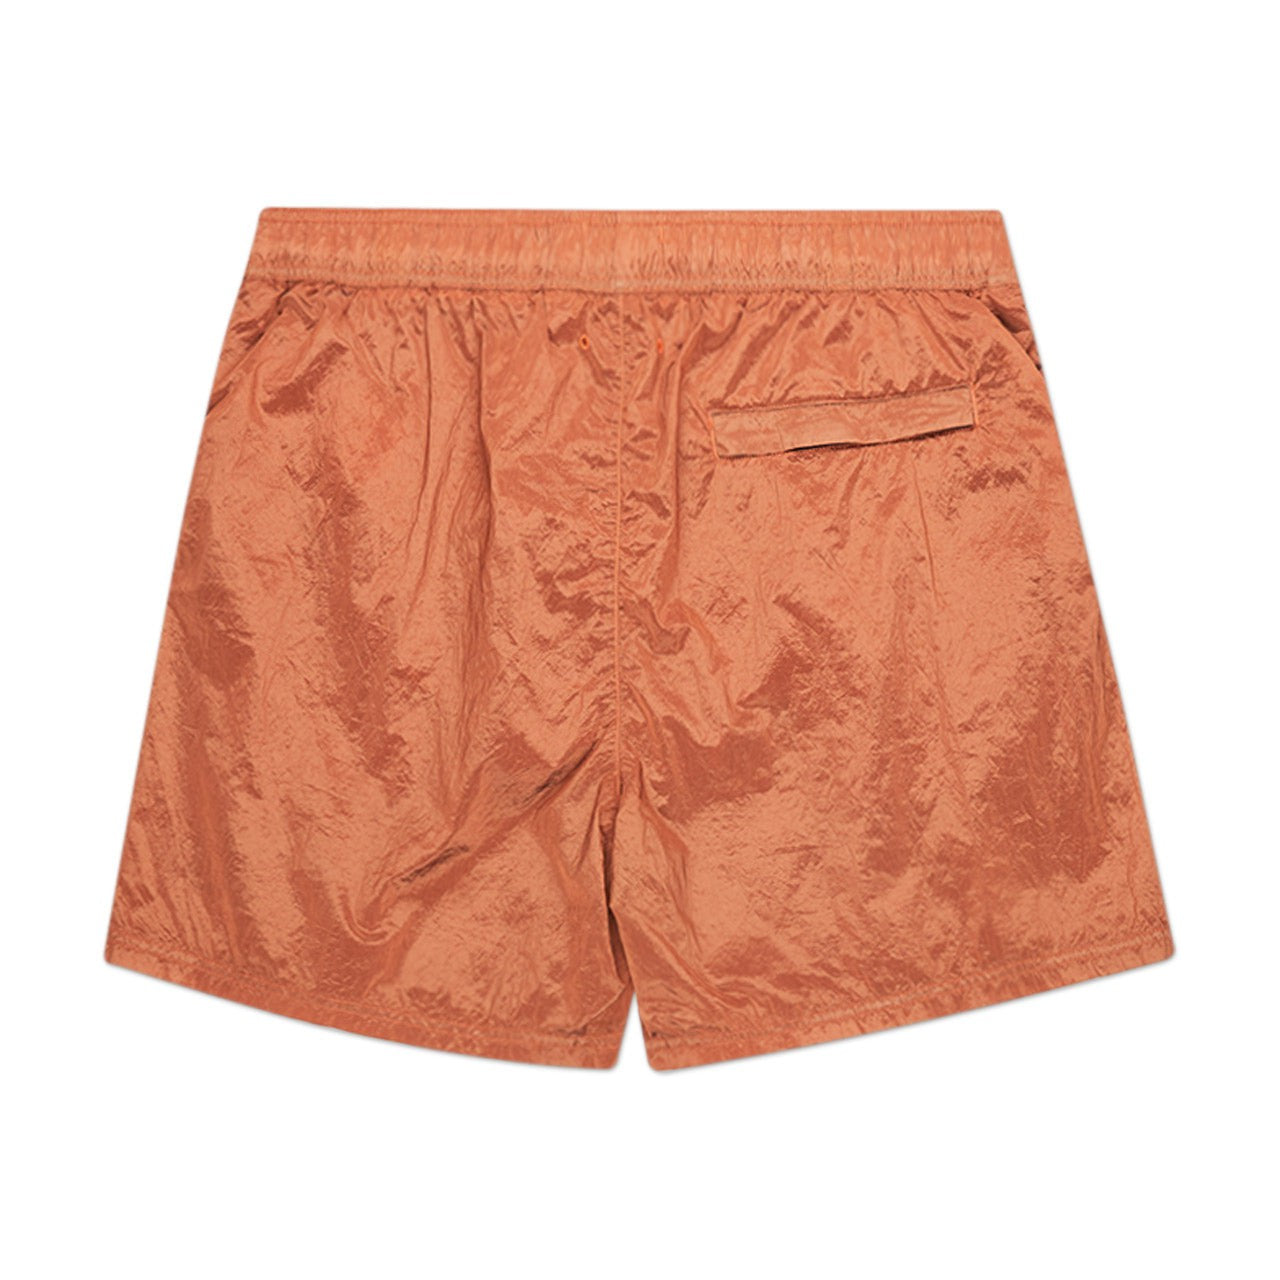 stone island stone island nylon metal swim shorts (orange)